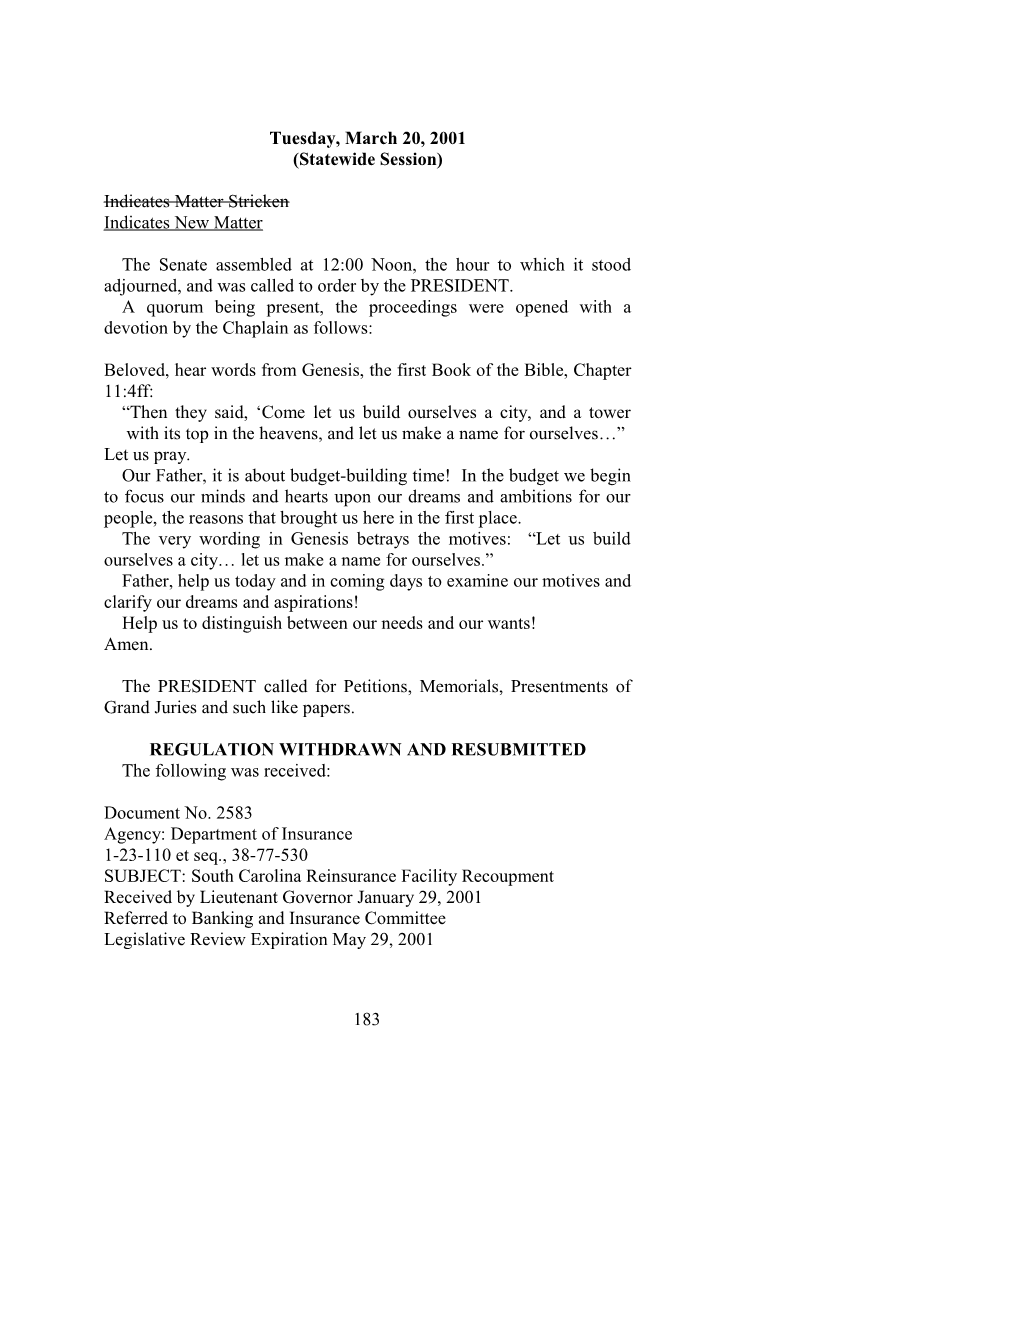 Senate Journal for Mar. 20, 2001 - South Carolina Legislature Online